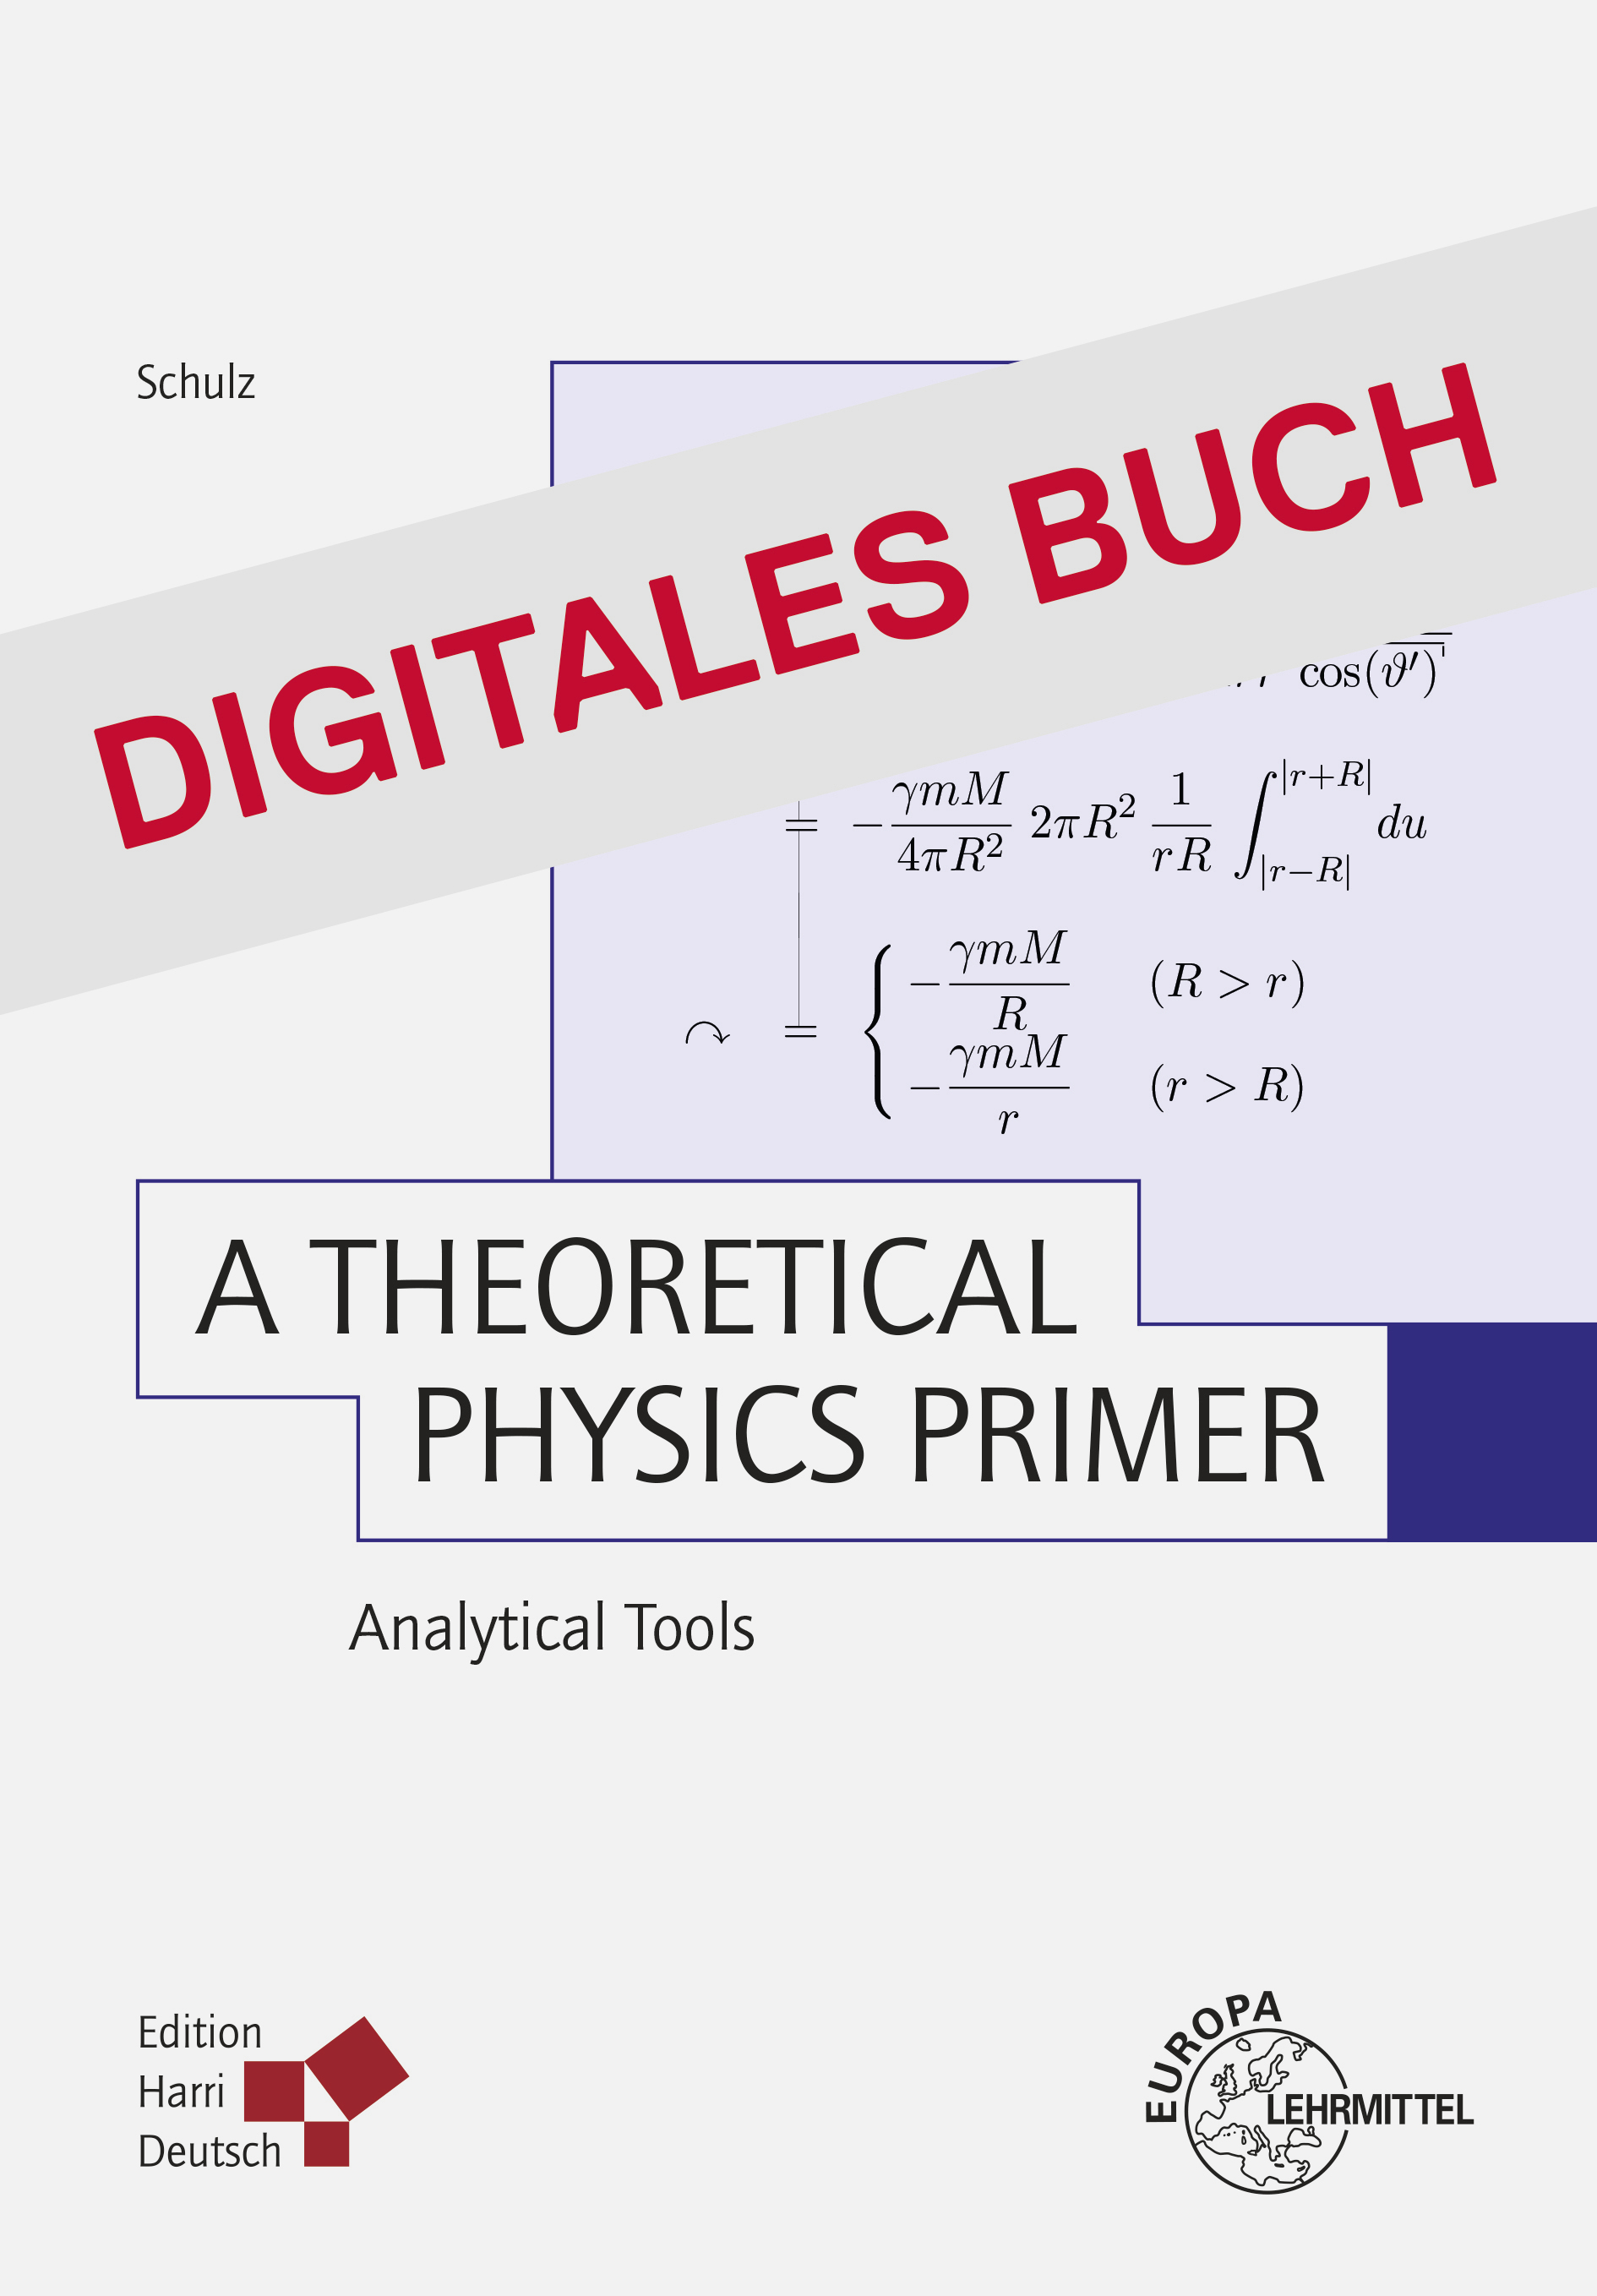 A Theoretical Physics Primer - Digitales Buch